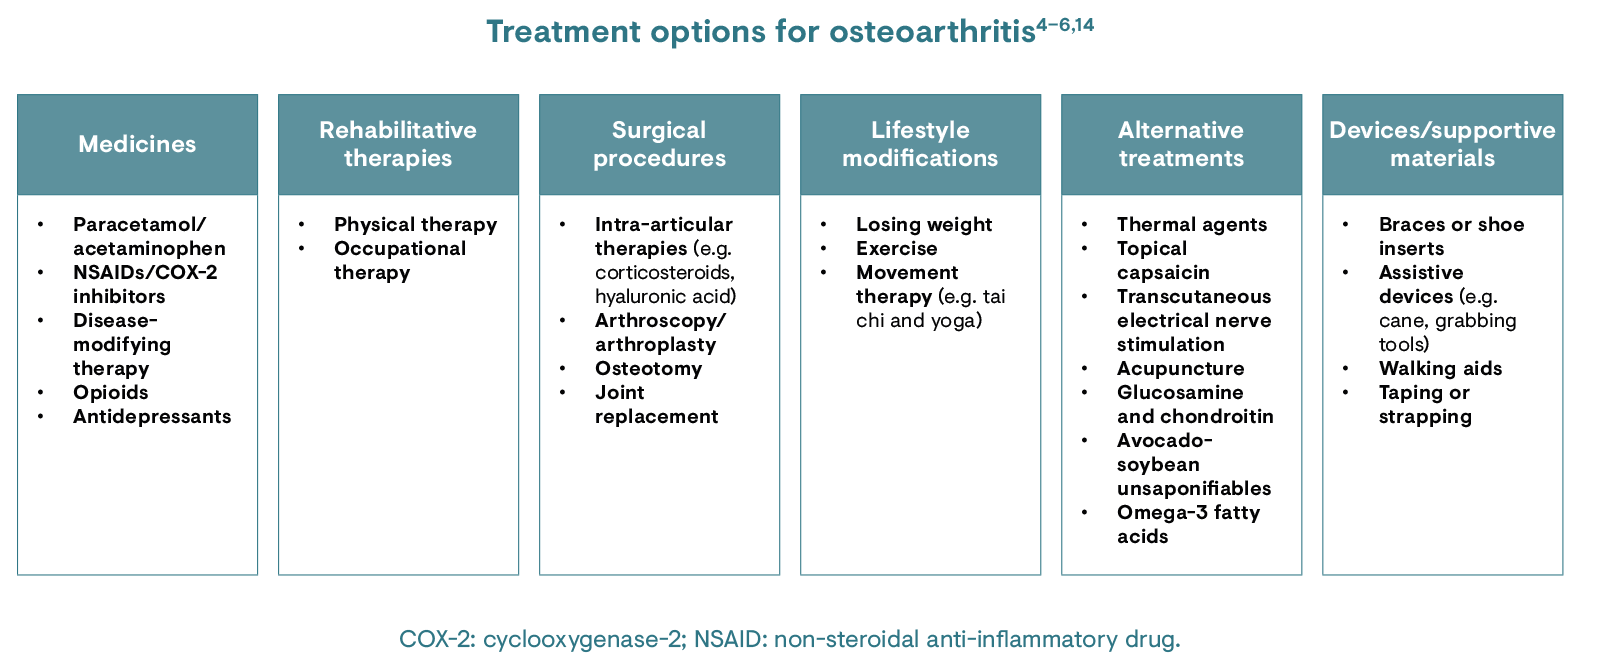 Treatment options for osteoarthritis